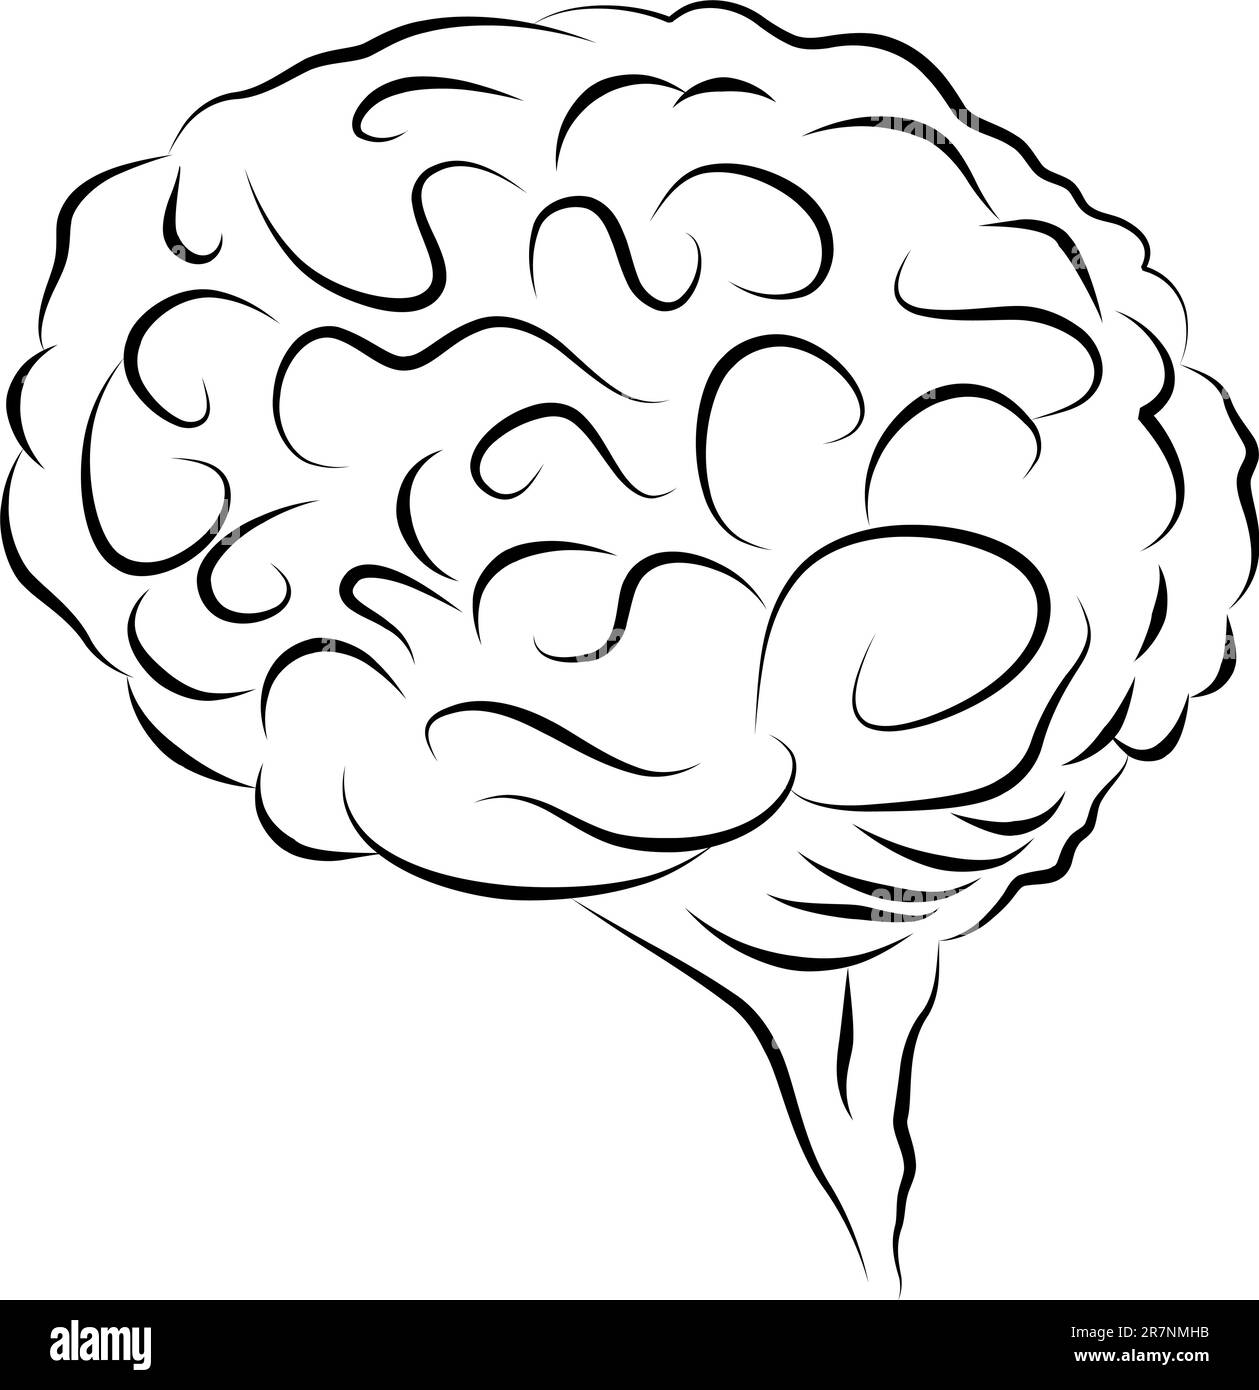 An image of a elegant human brain design element. Stock Vector